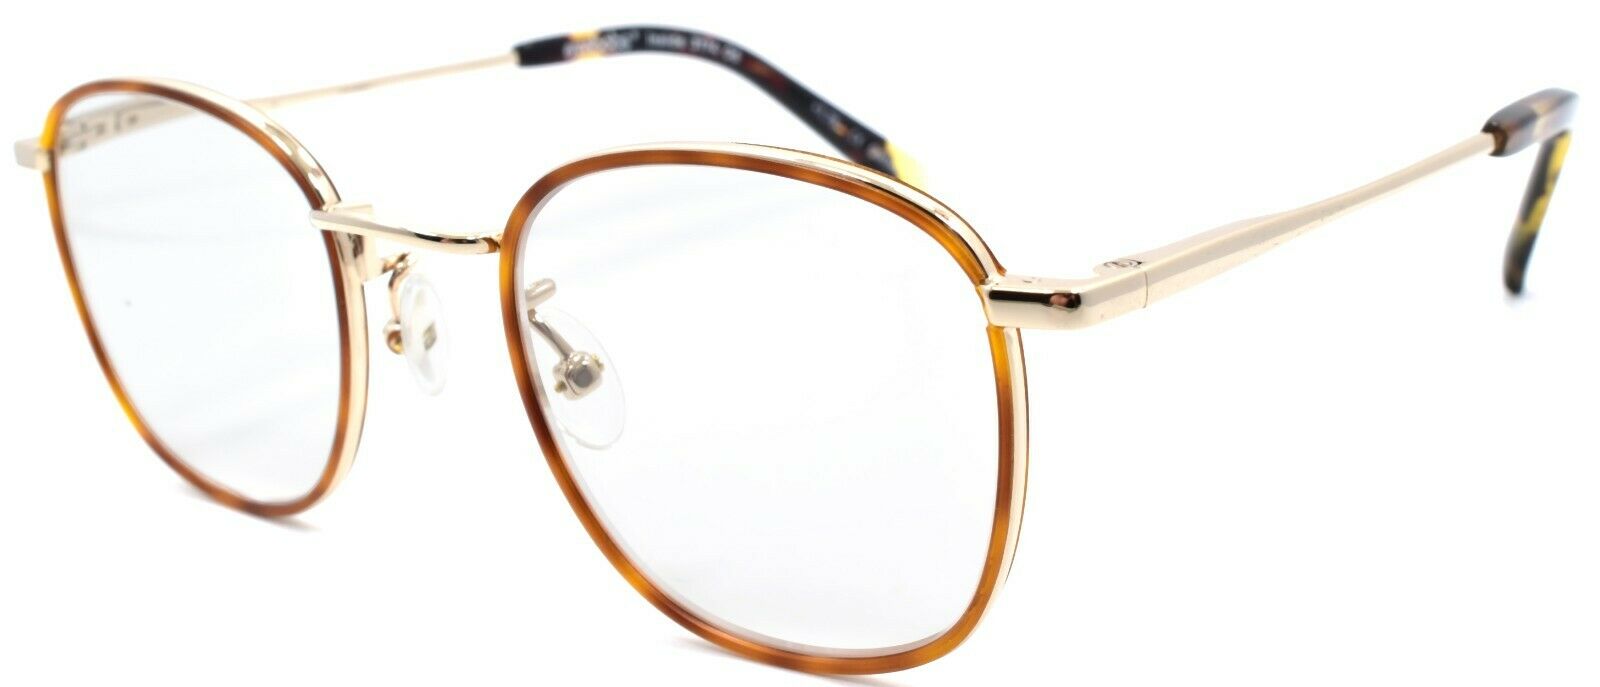 1-Eyebobs Inside 3174 06 Unisex Reading Glasses Orange Tortoise / Gold +2.25-842754169615-IKSpecs